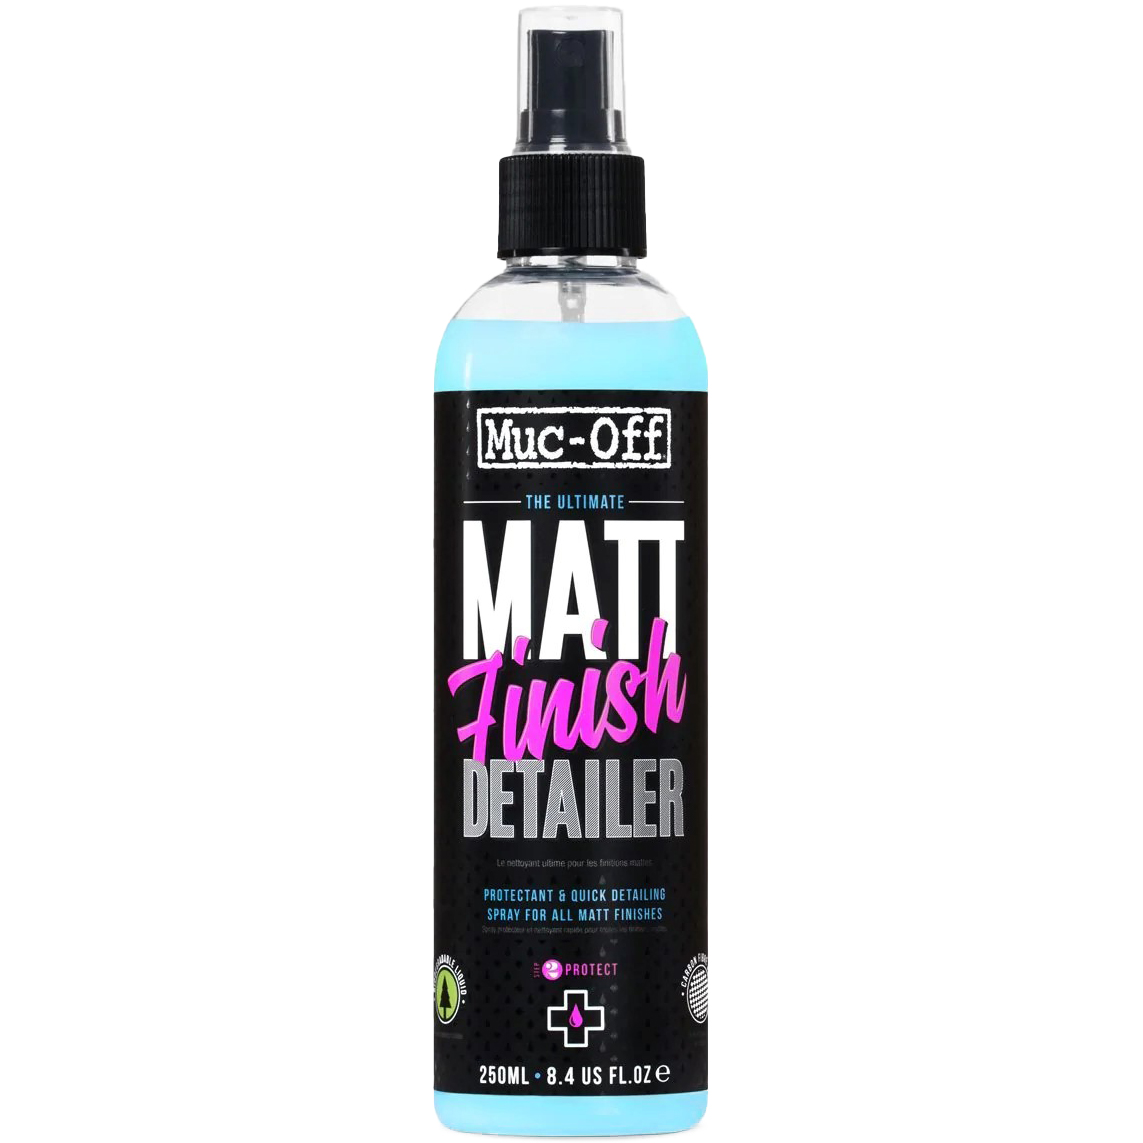 Productfoto van Muc-Off Matt Finish Detailer - 250 ml Spray Bottle